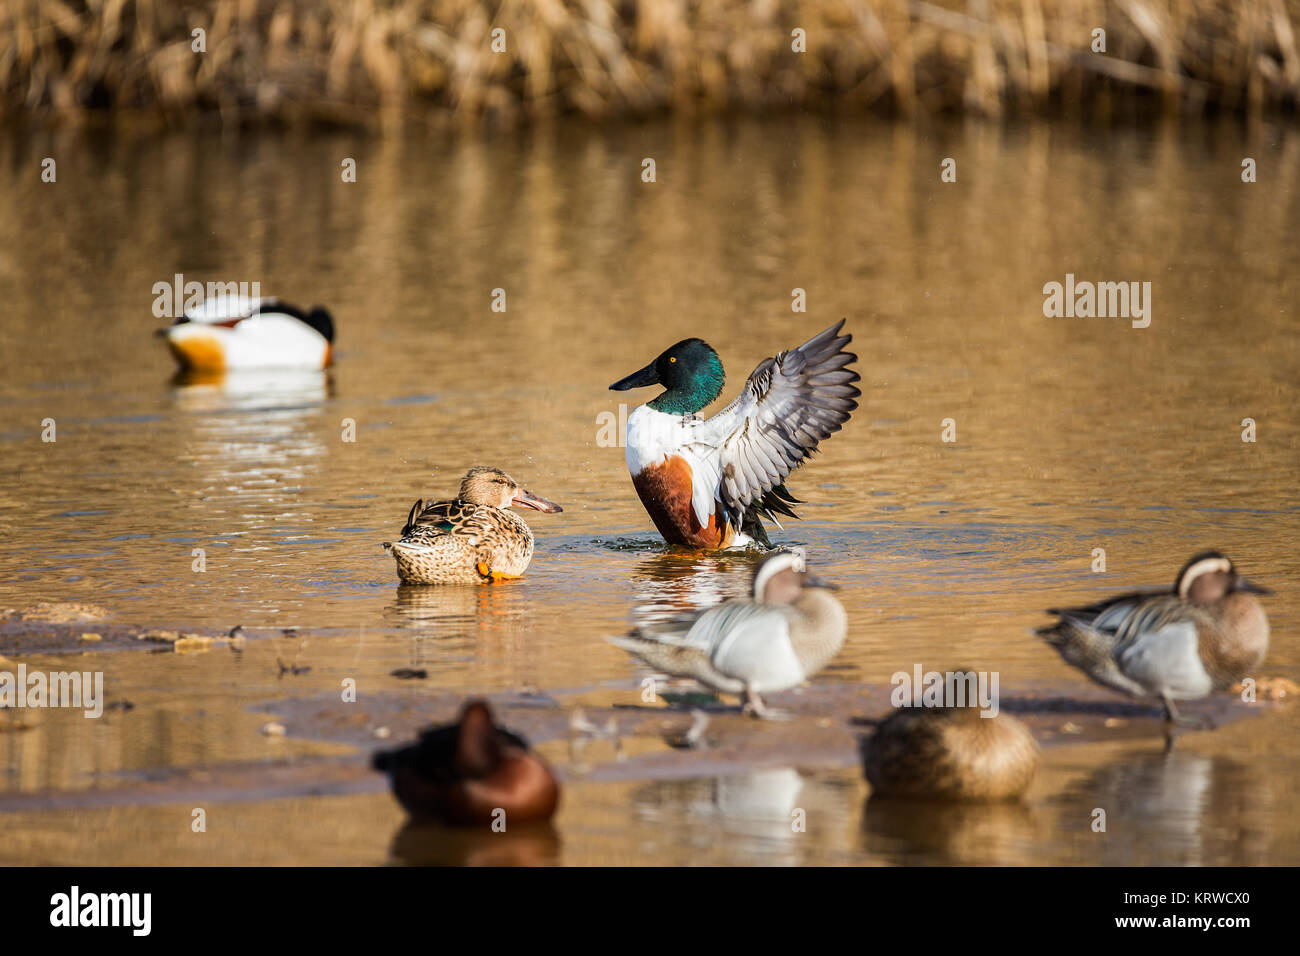 Ducks in the National Park of Tablas de Daimiel. Spain. Stock Photo